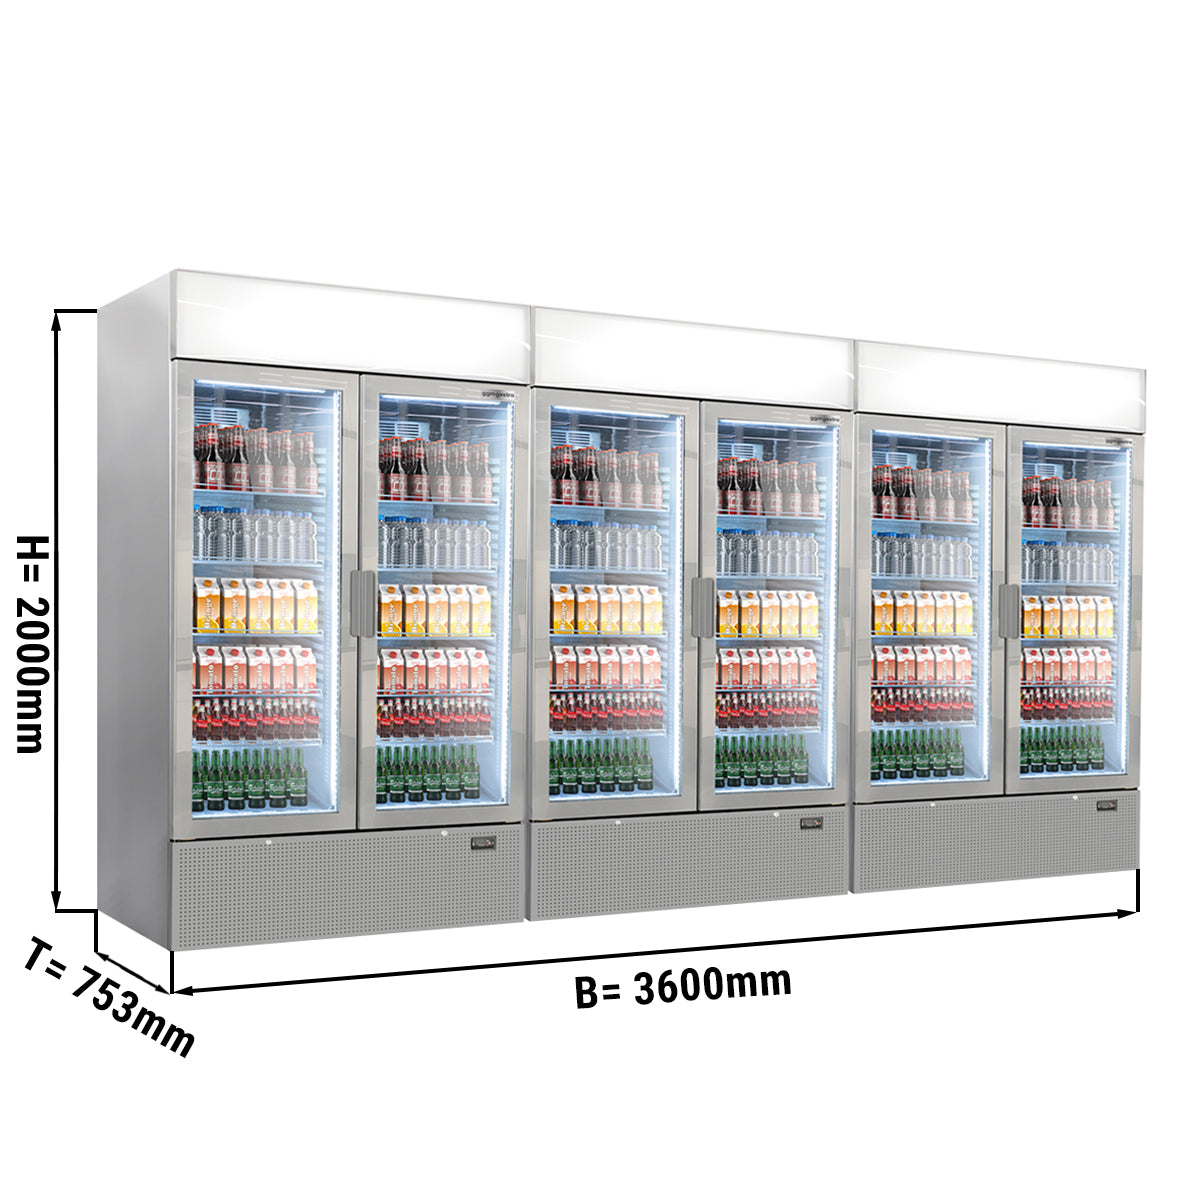 (3 stk) Flaskekøleskab - 3144 liter (Total) - Grå